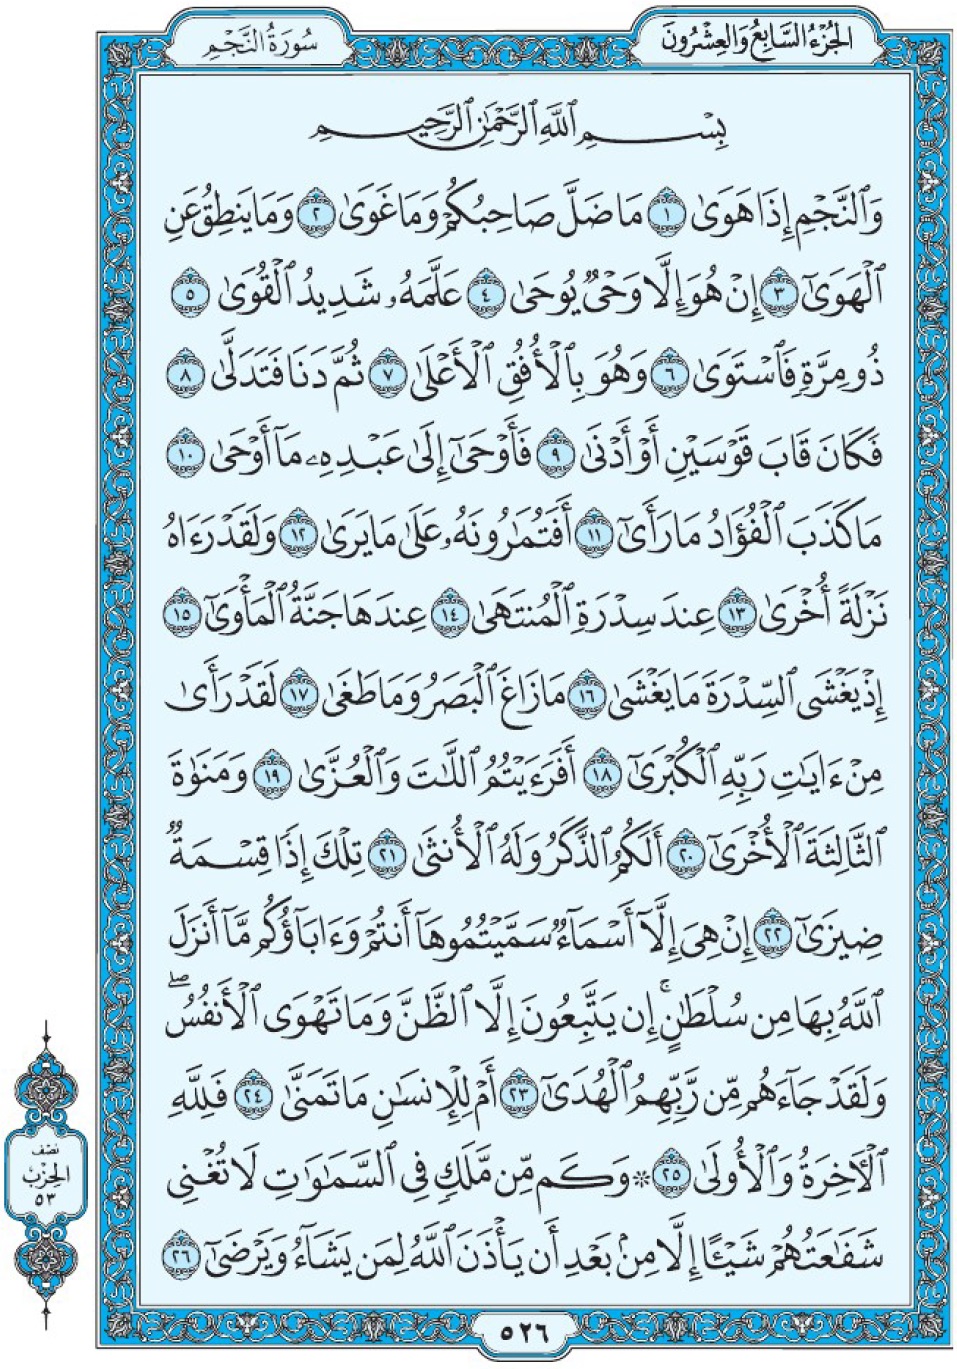 Коран Мединский мусхаф страница 526, сура 53 ан-Наджм سورة ٥٣ النجم